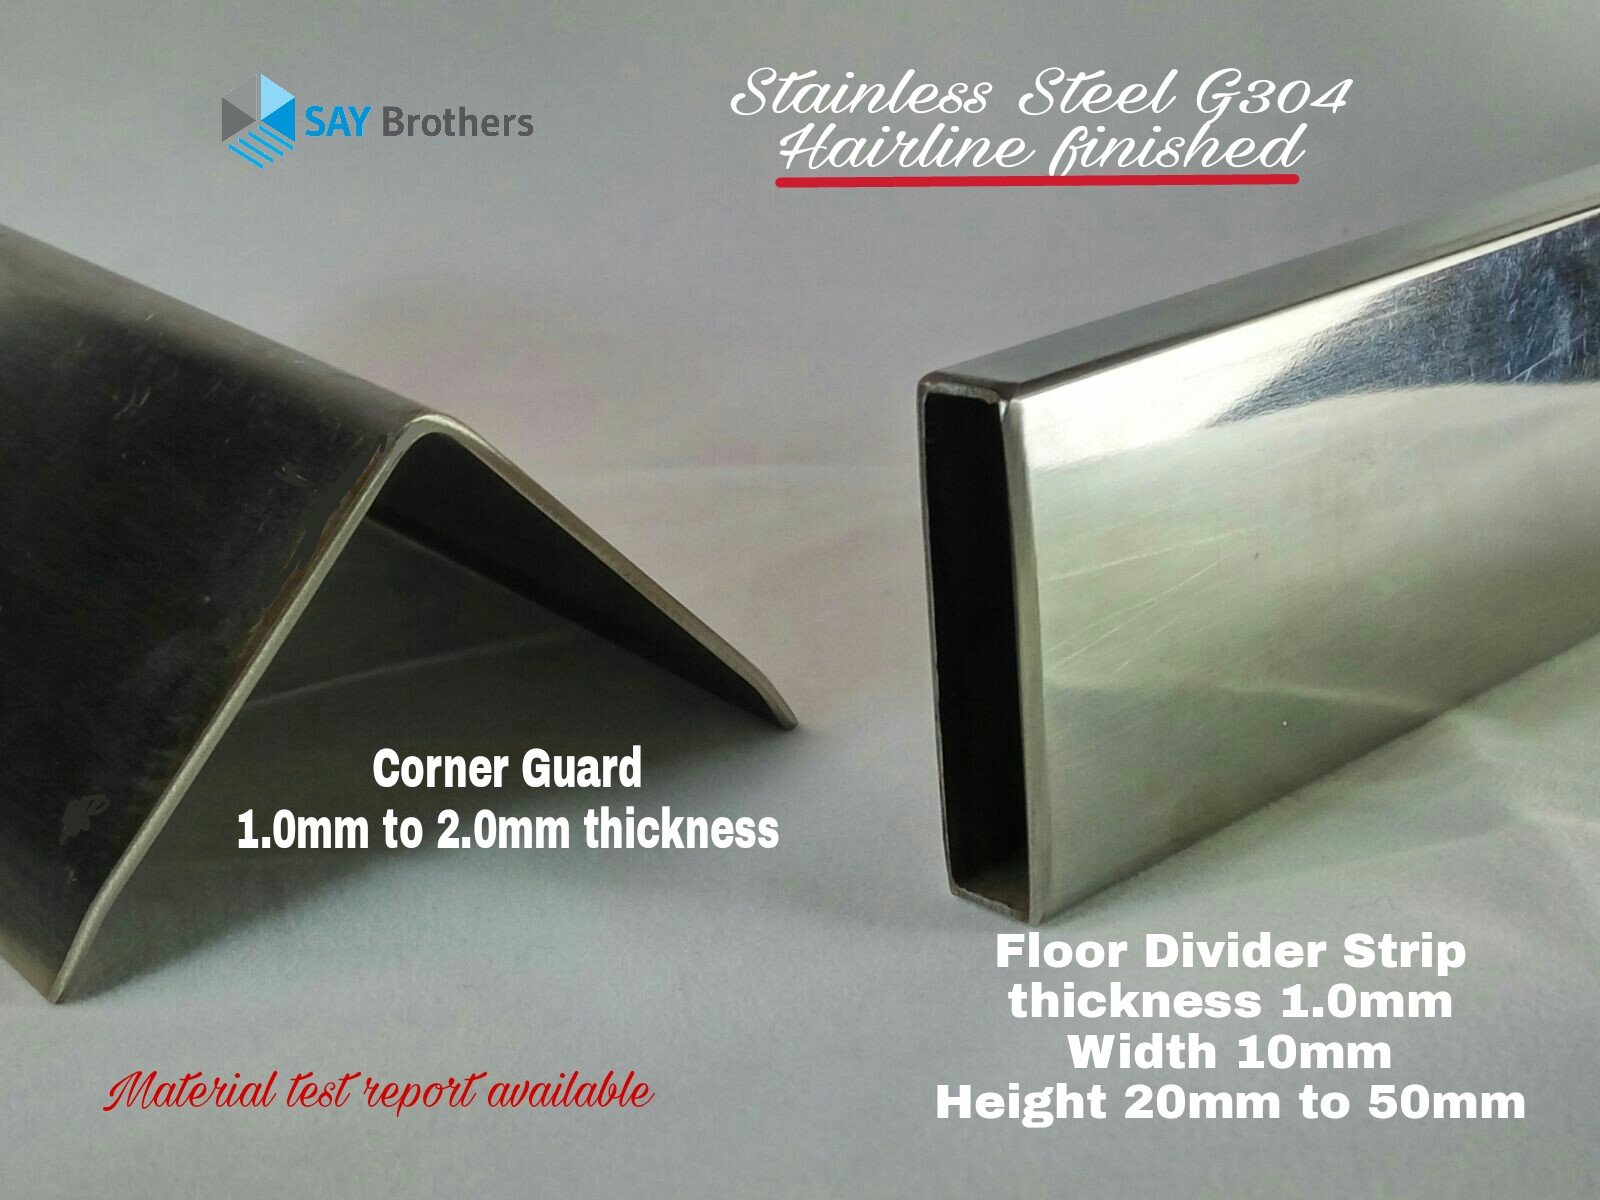 Stainless Steel Floor Strip | Say Brothers